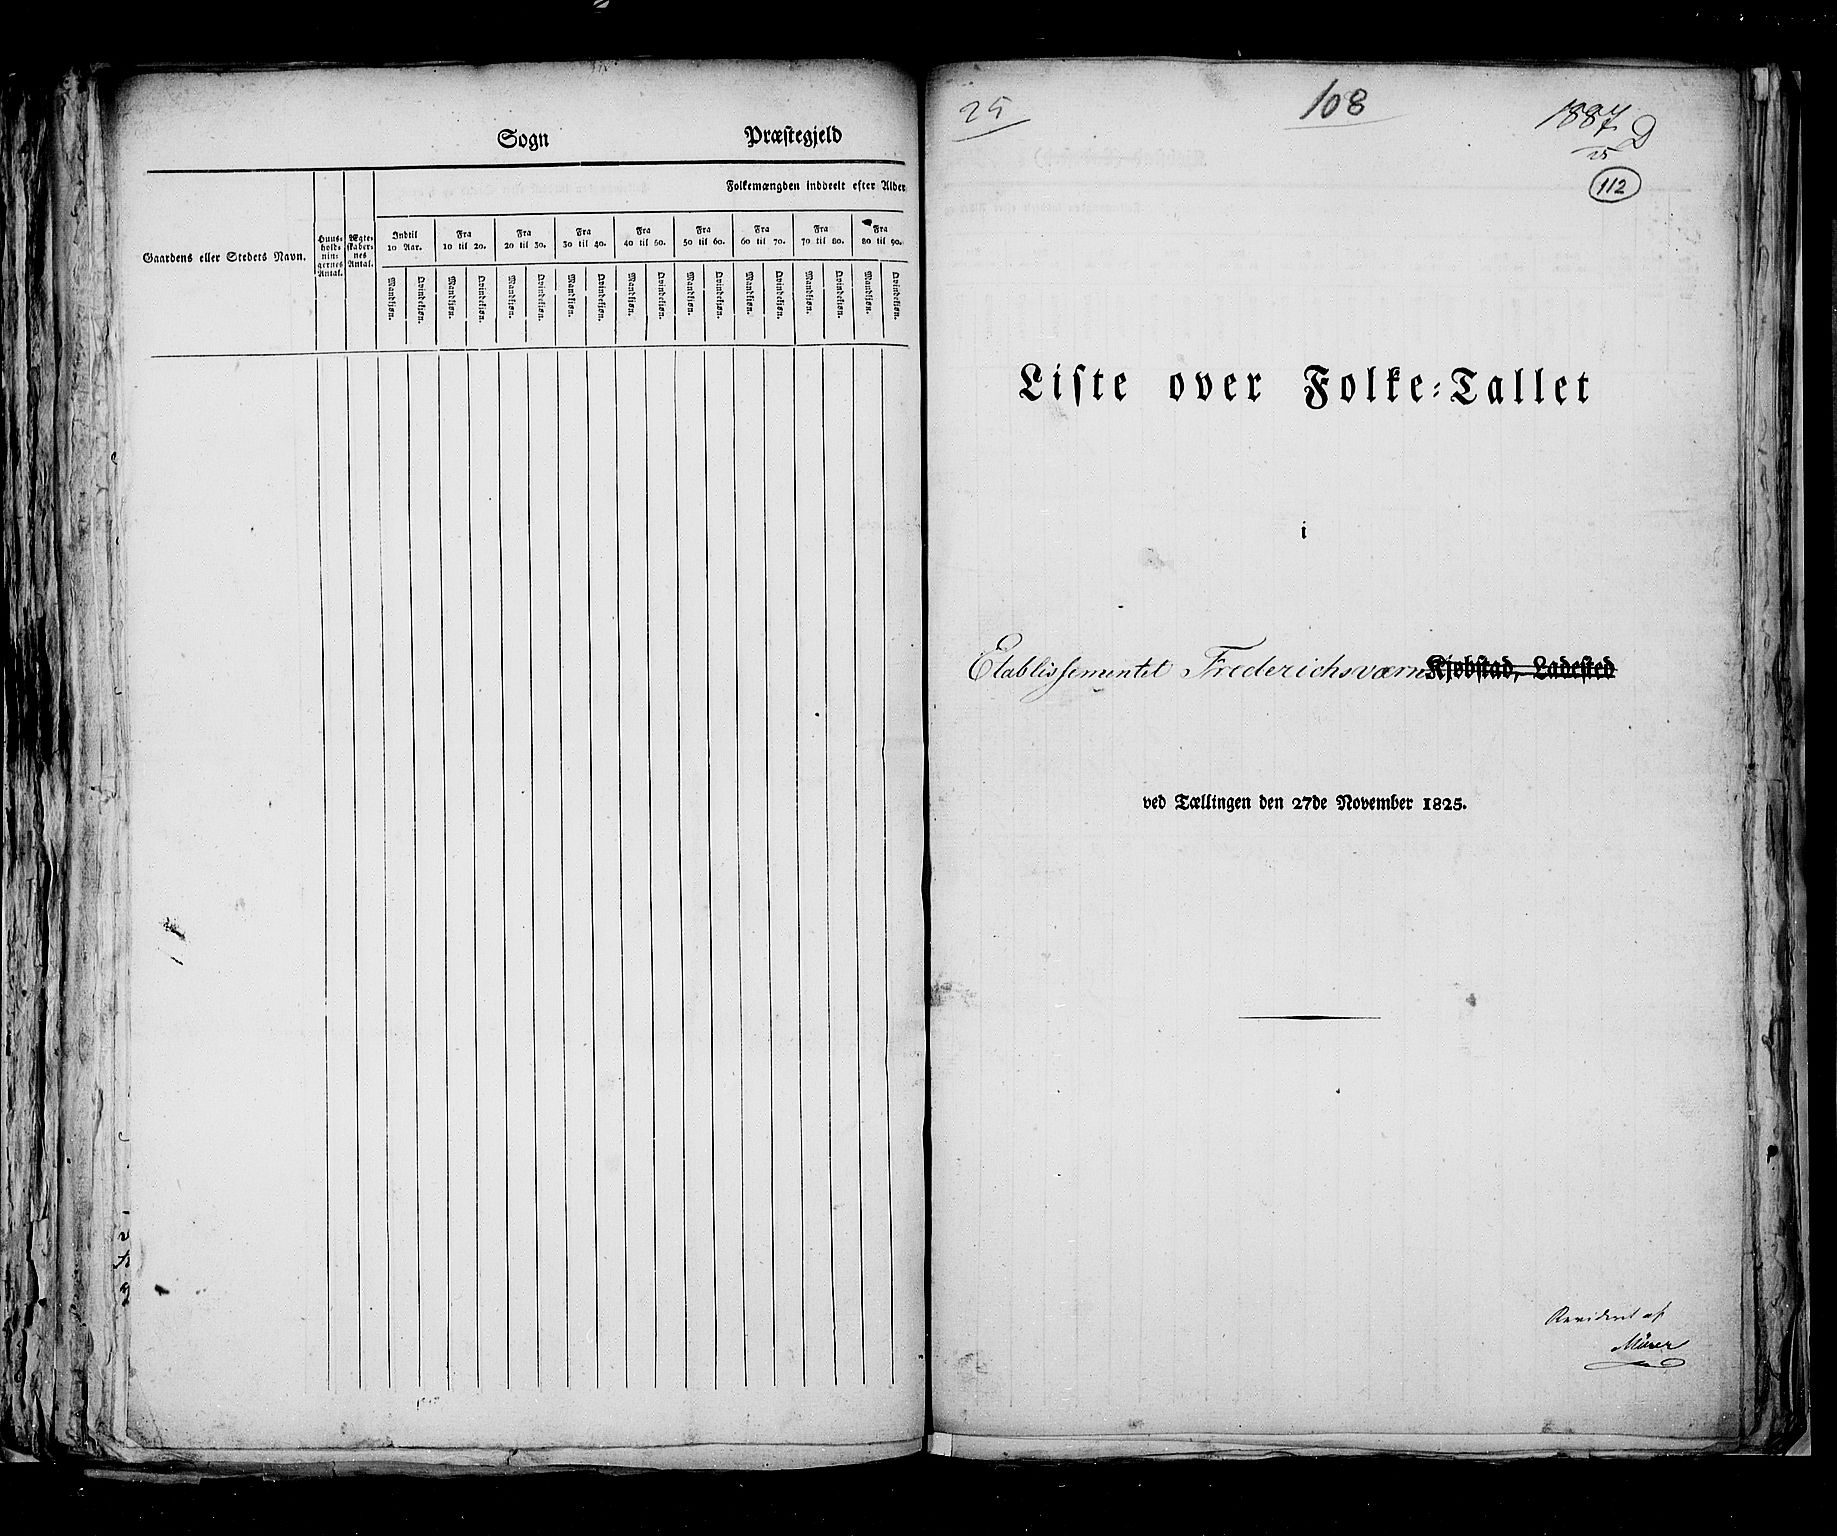 RA, Census 1825, vol. 8: Jarlsberg og Larvik amt, 1825, p. 112